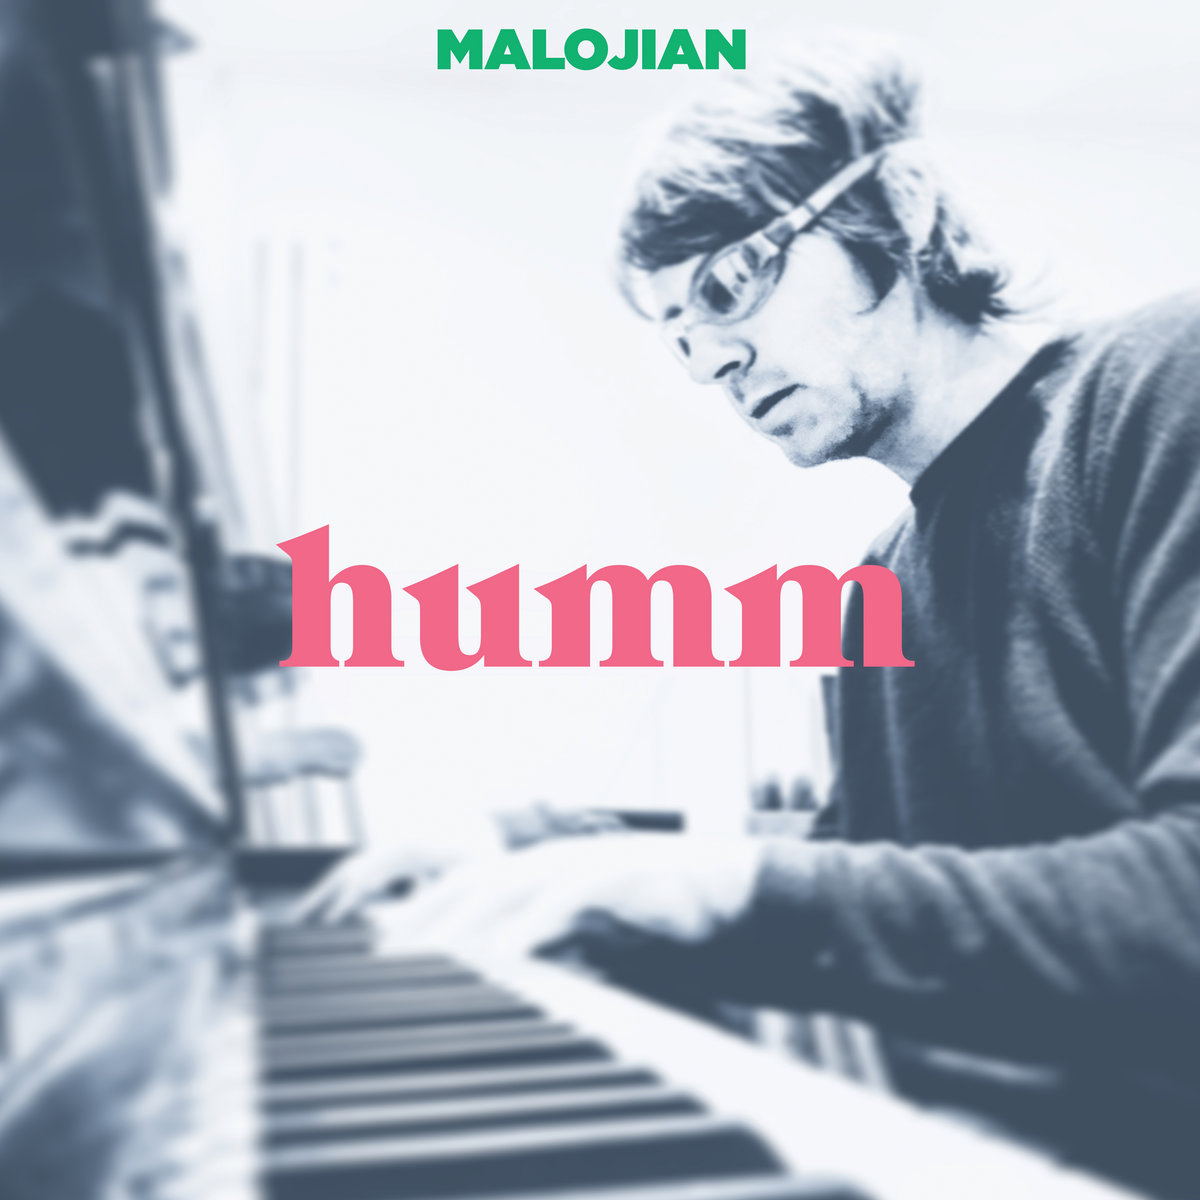 ALBUM REVIEW: Malojian - Humm 